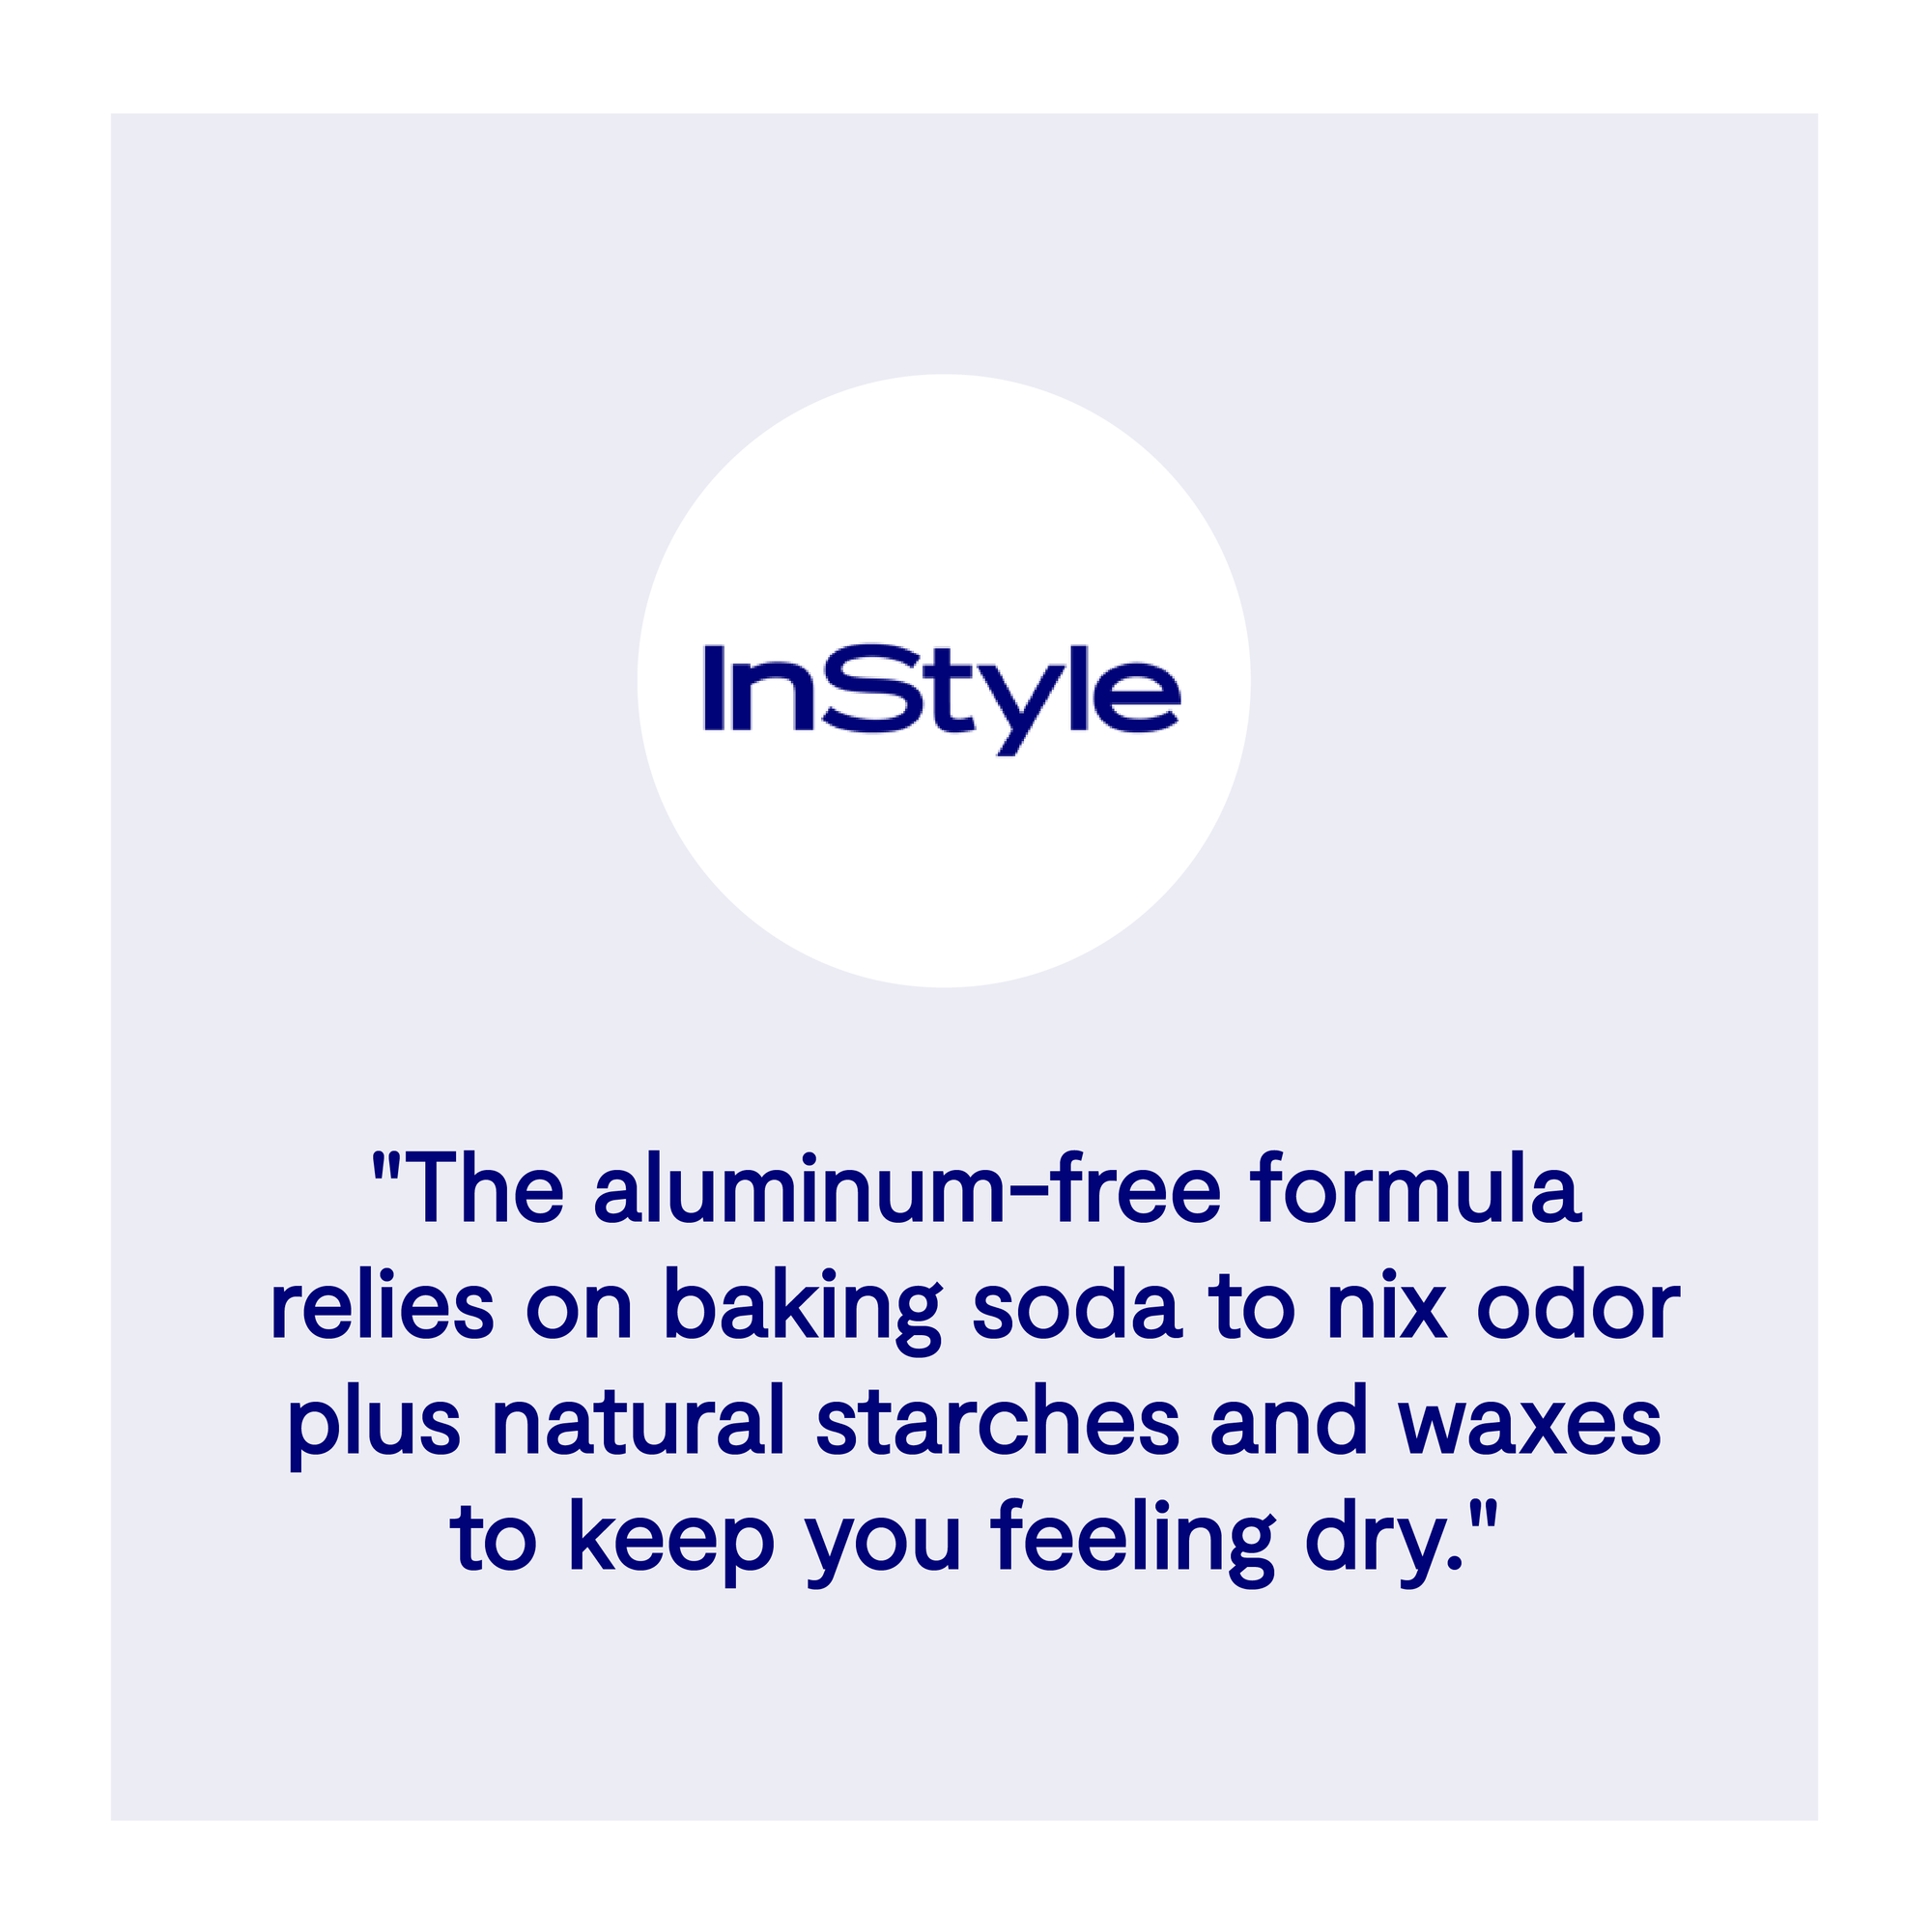 Instyle best aluminum free deodorant testimonial reviews